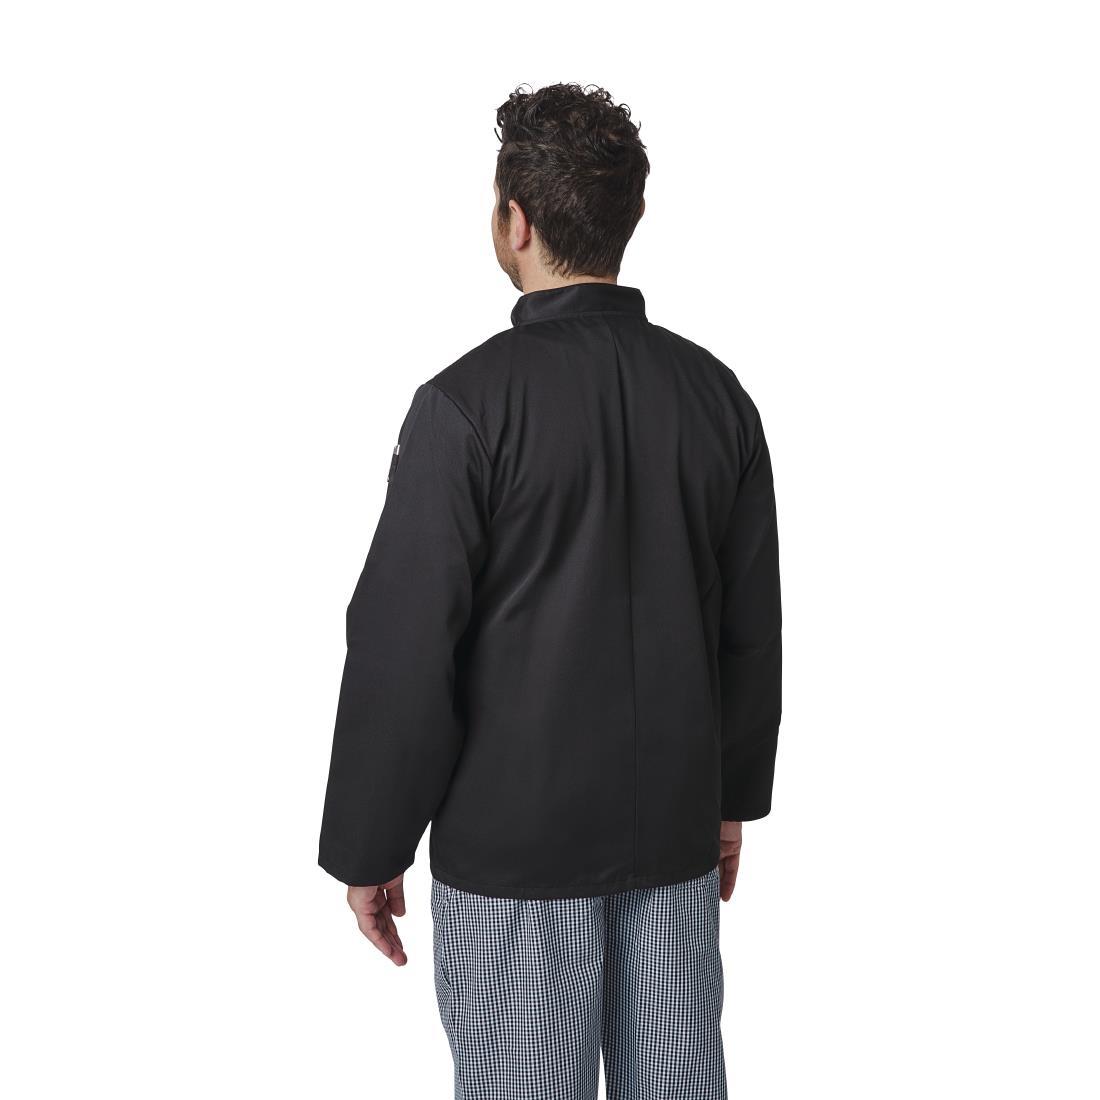 Whites Vegas Unisex Chefs Jacket Long Sleeve Black S - A438-S  - 6